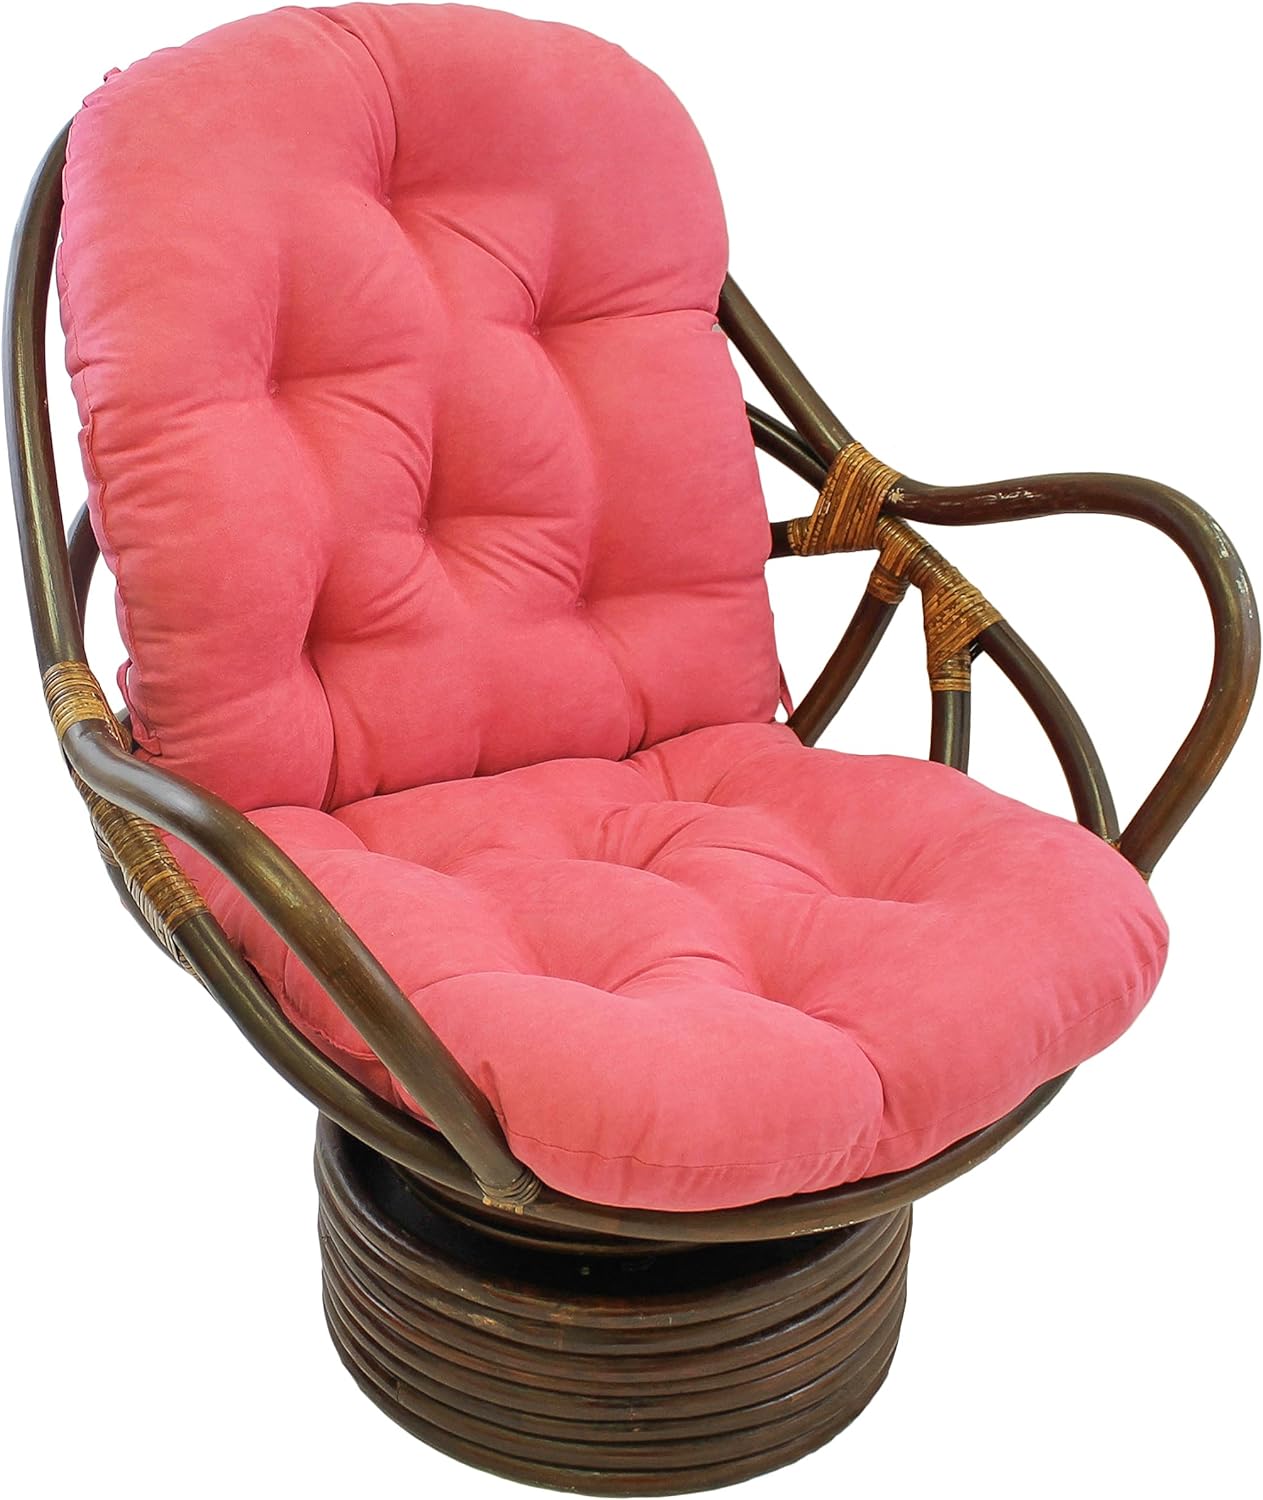 Blazing Needles Solid Microsuede Swivel Rocker Chair Cushion, 48" x 24", Camel